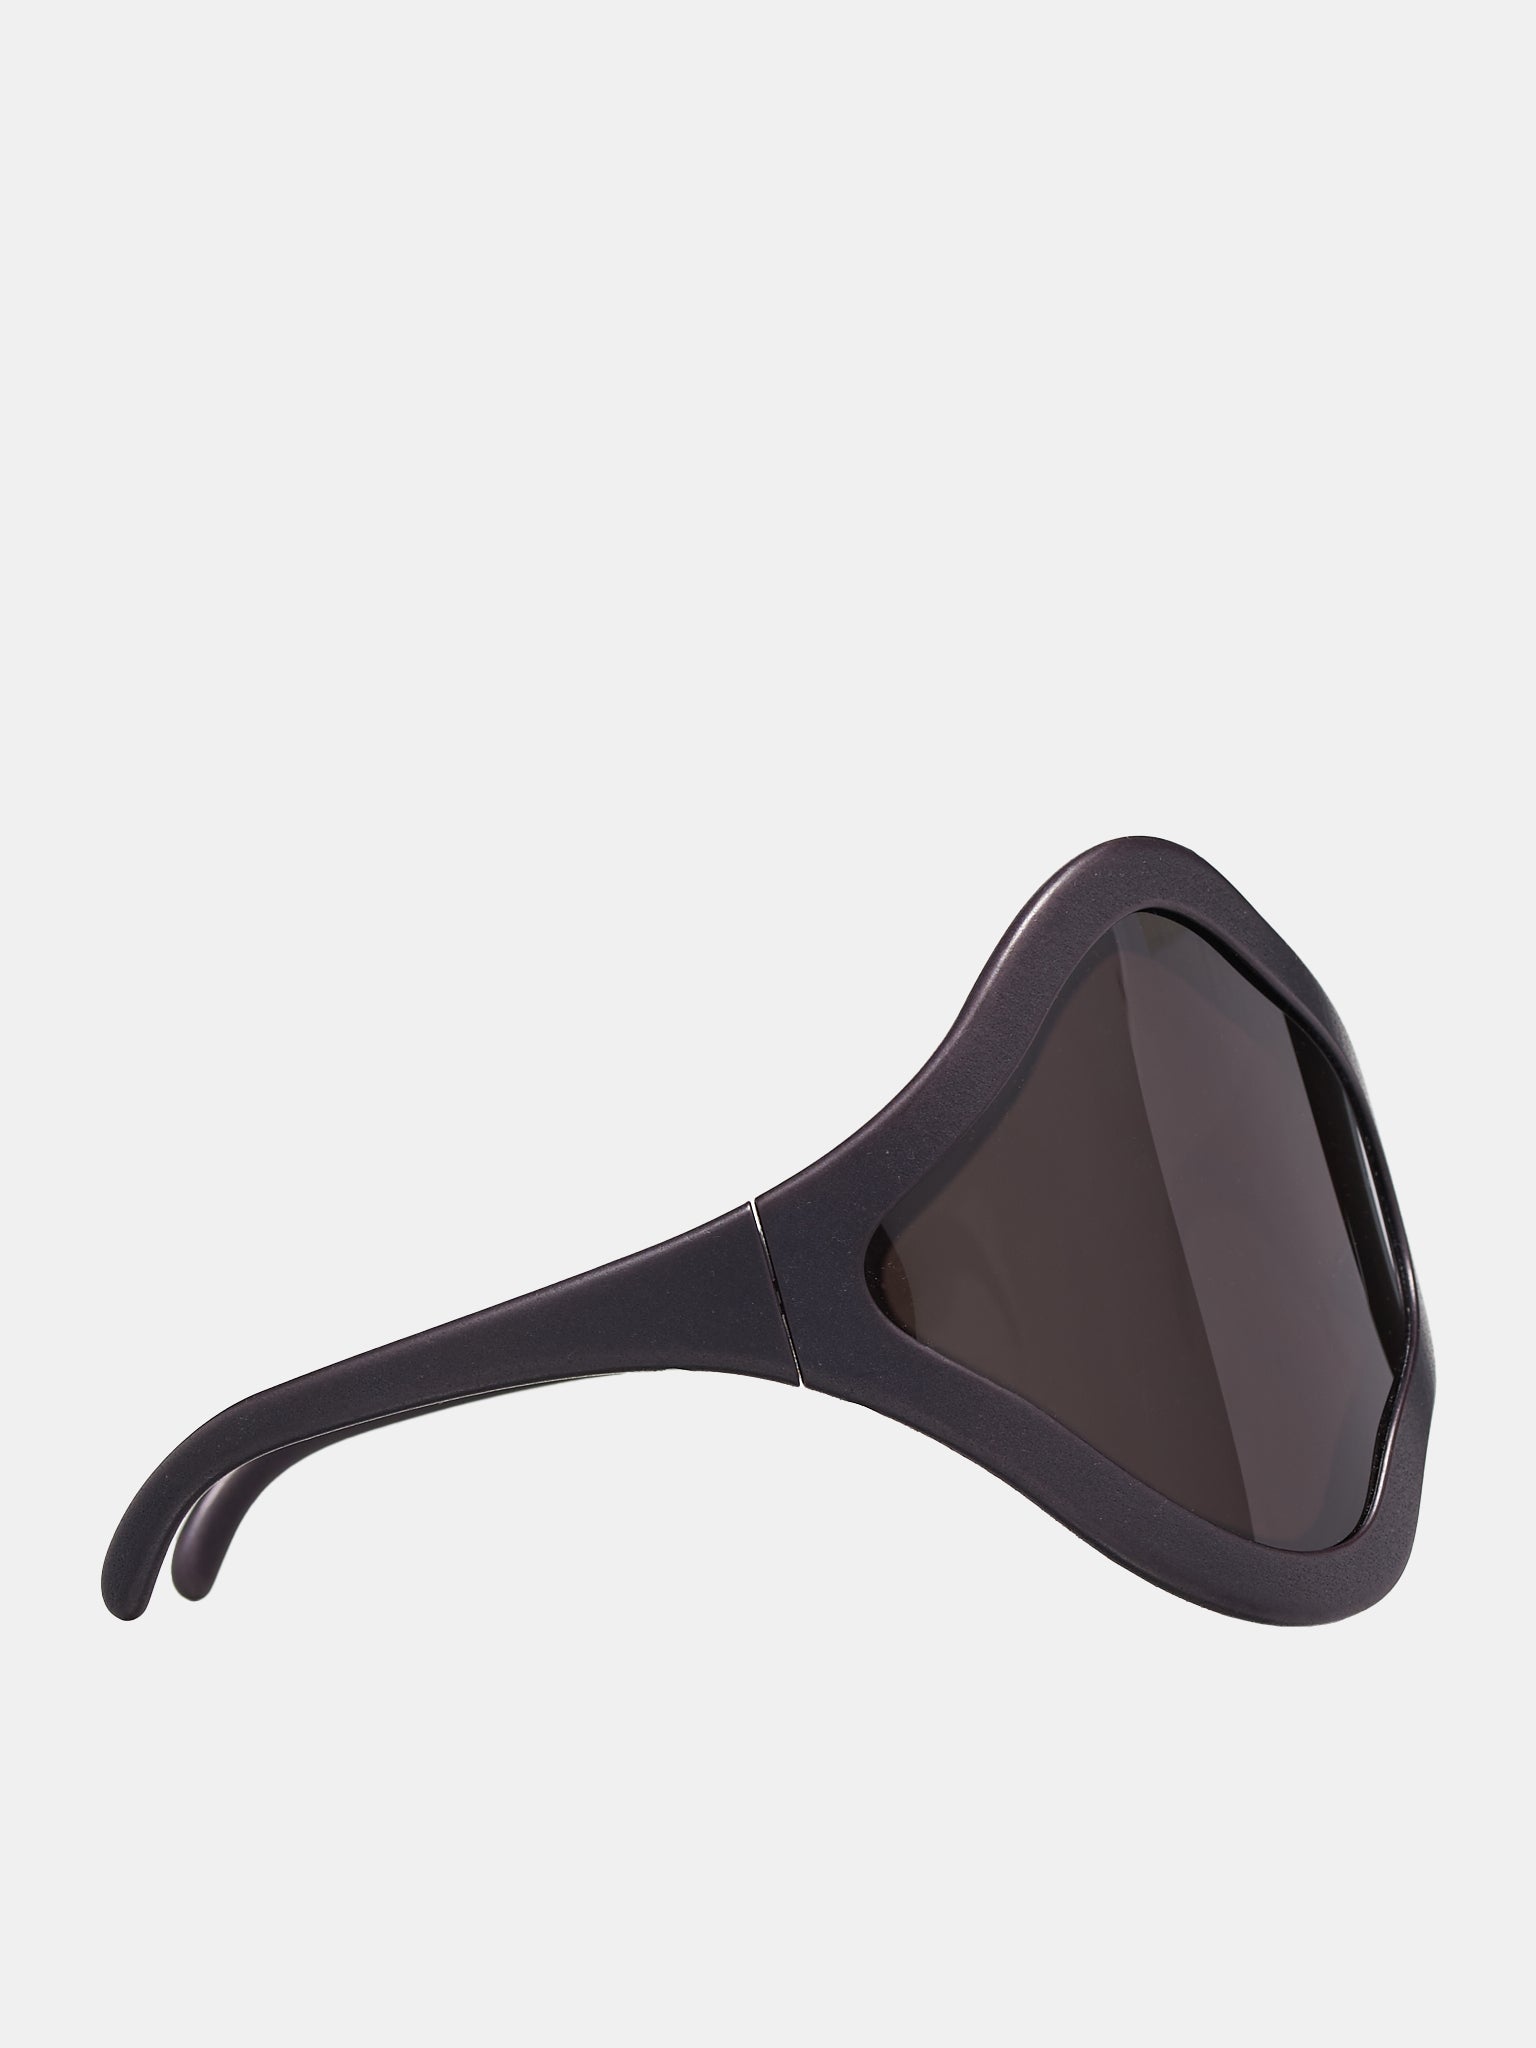 Panda Sunglasses (S24M1401-BLACK)